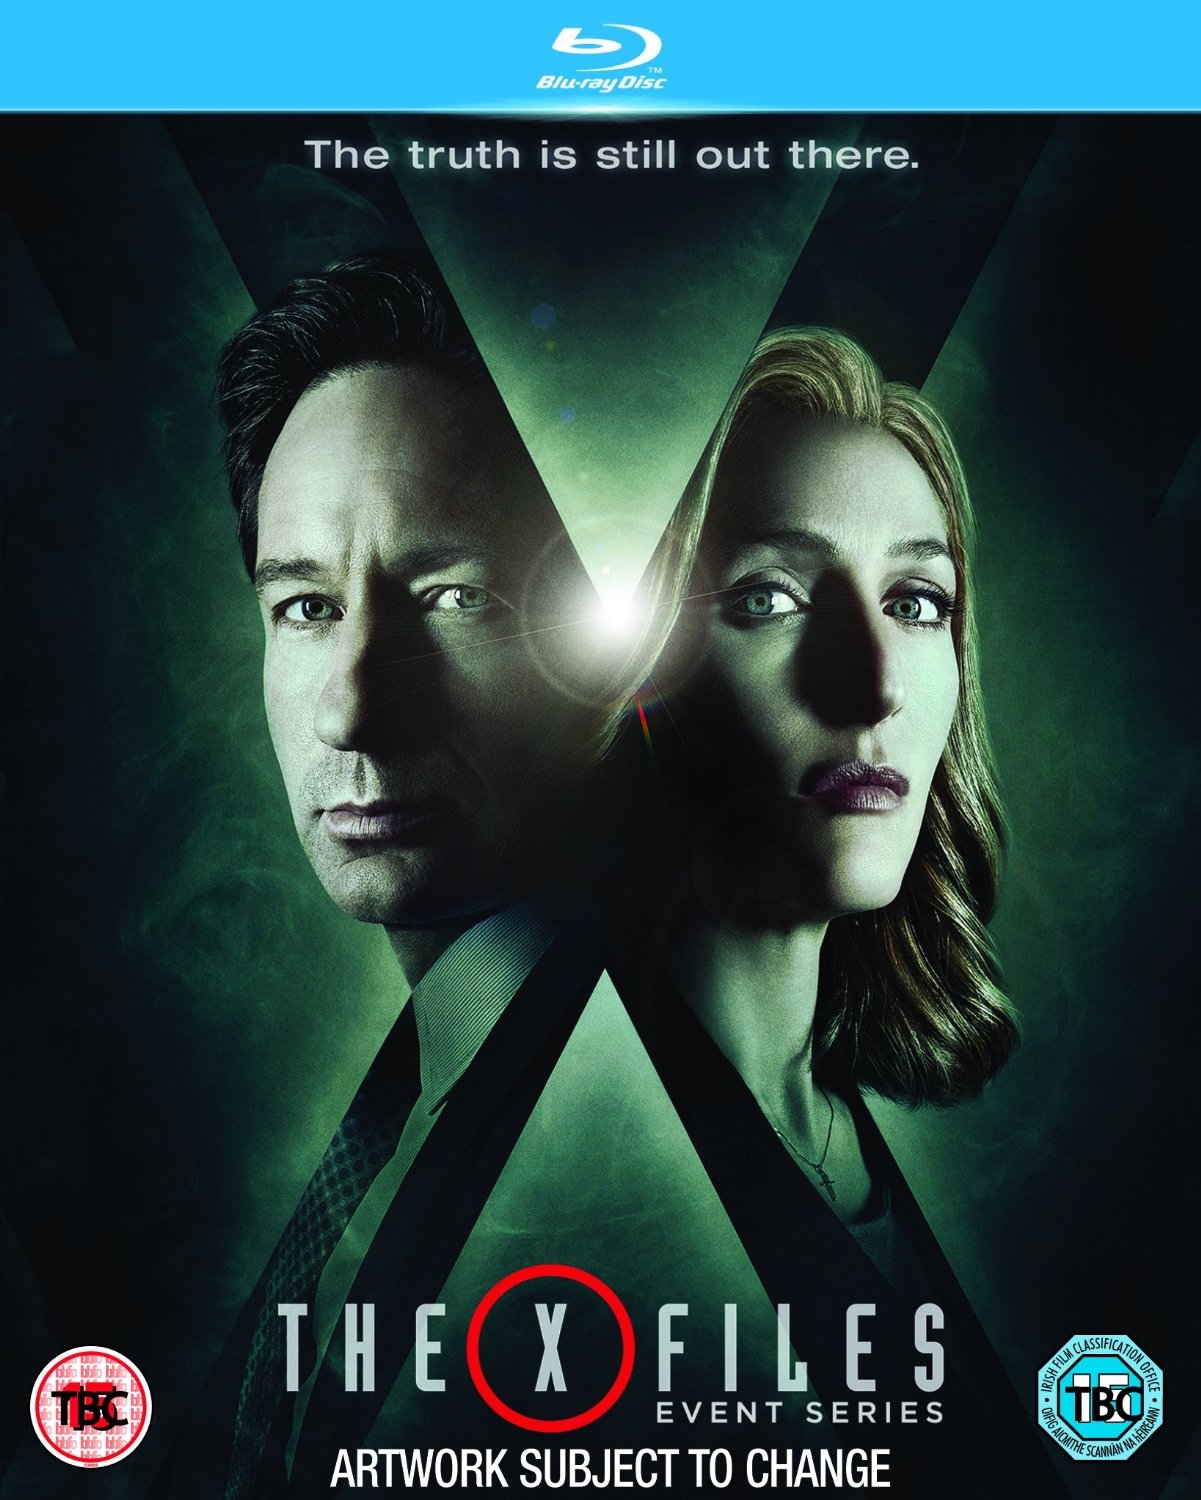 X Files event series